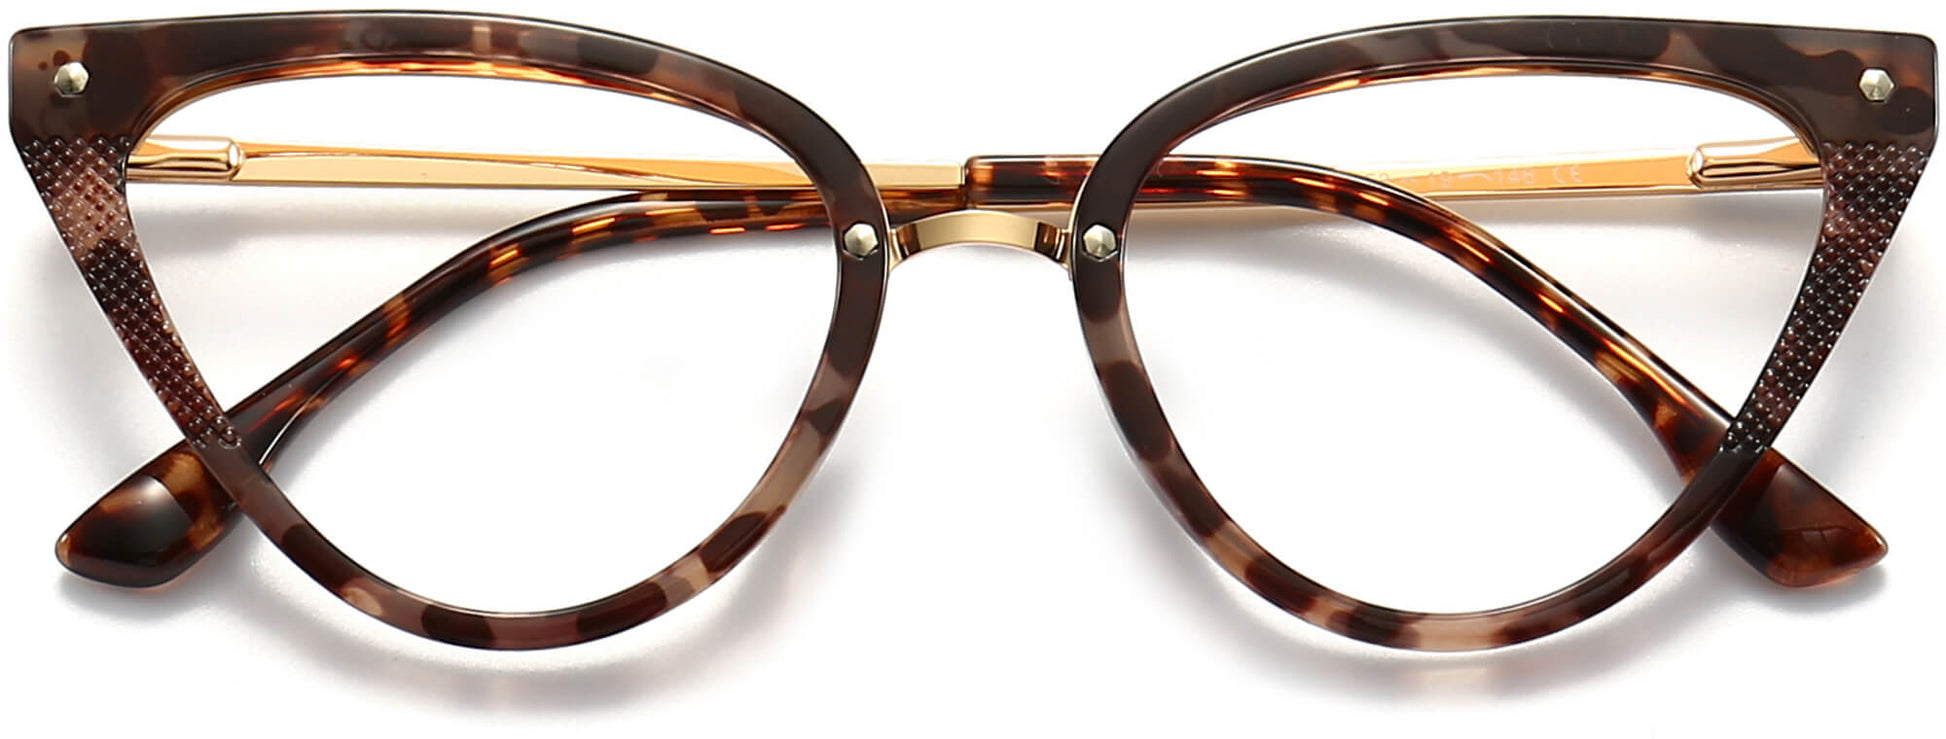 Faye Cateye Tortoise Eyeglasses from ANRRI, closed view